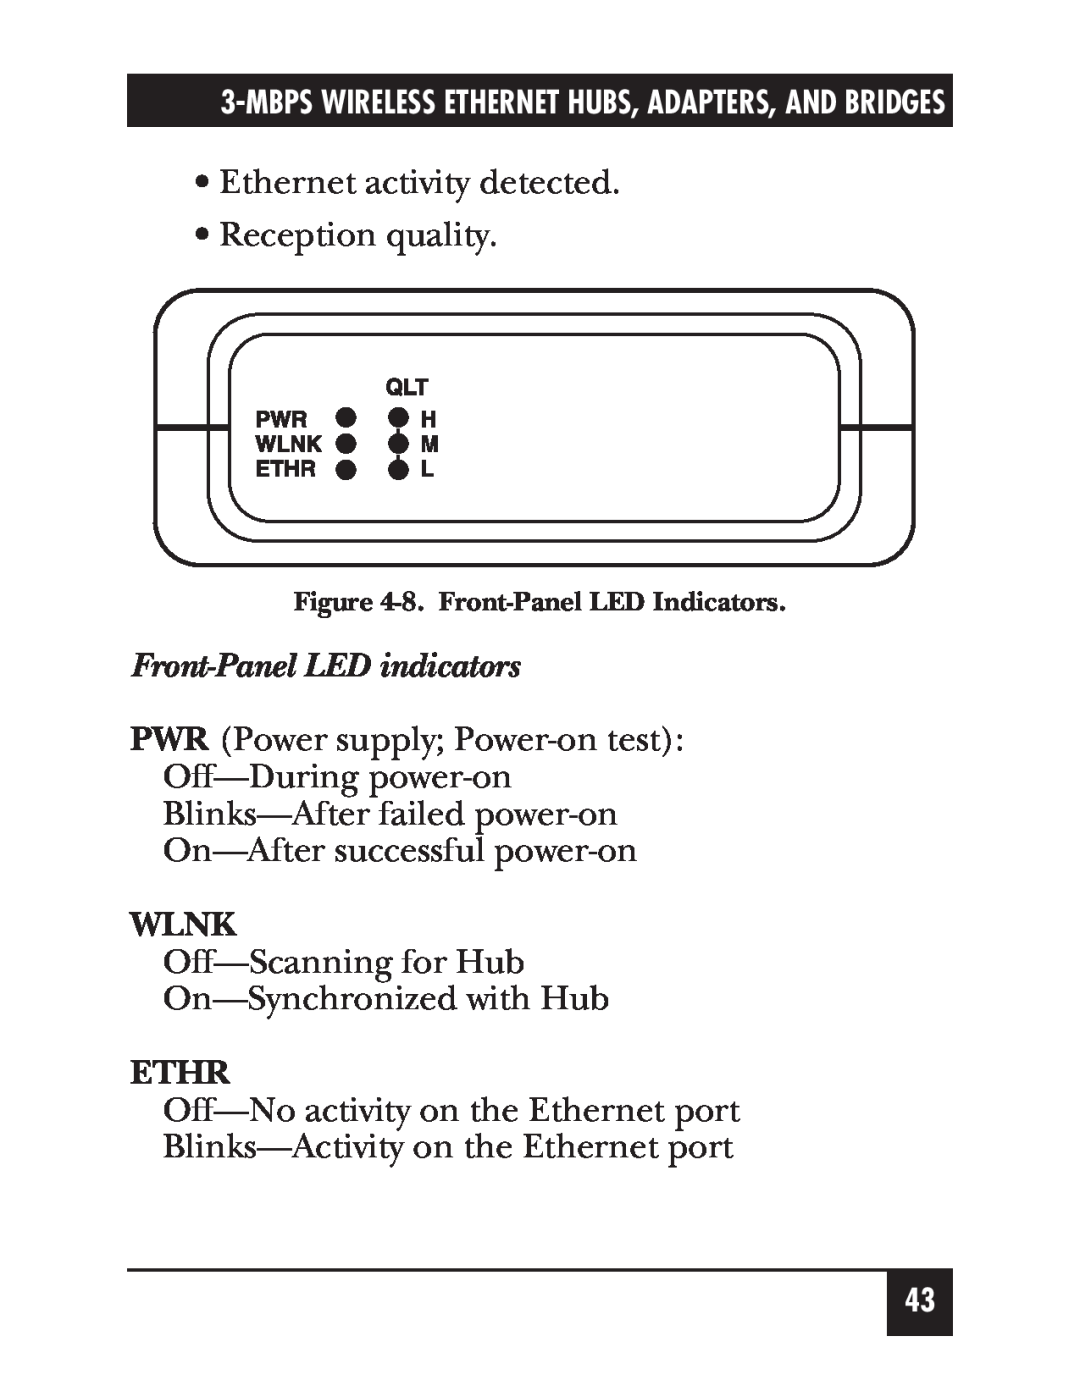 Black Box LW009A, LW012A, LW011A Front-Panel LED indicators, Wlnk, Ethr, Mbps Wireless Ethernet Hubs, Adapters, And Bridges 